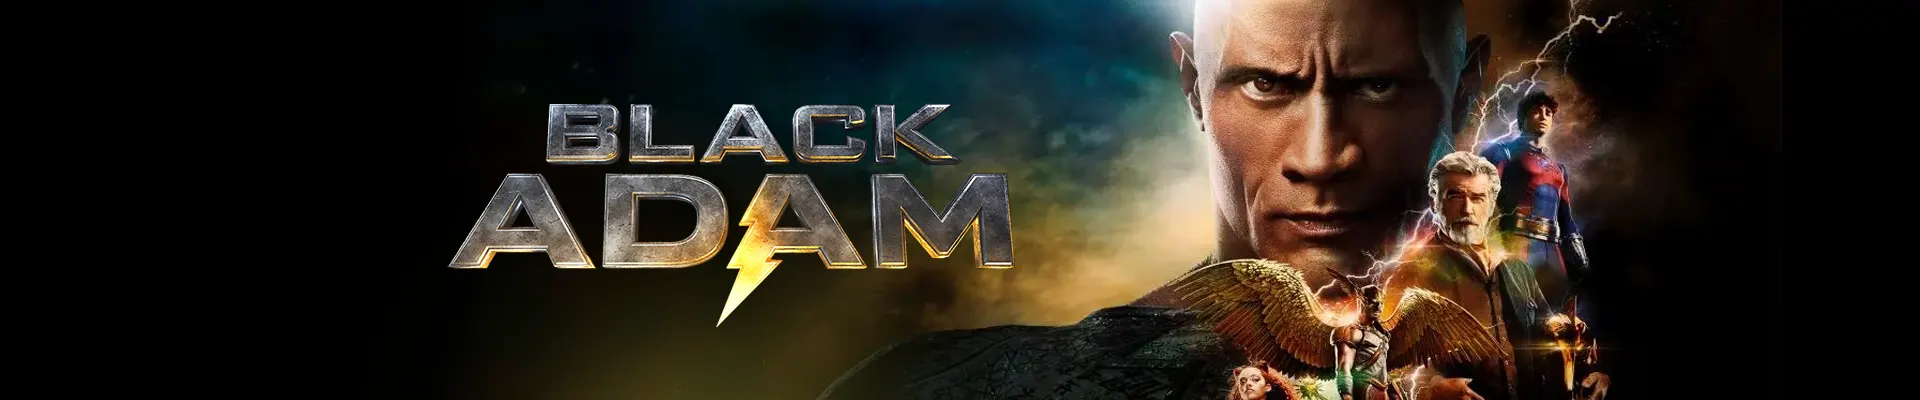 Black Adam (2022) แบล็ค อดัม